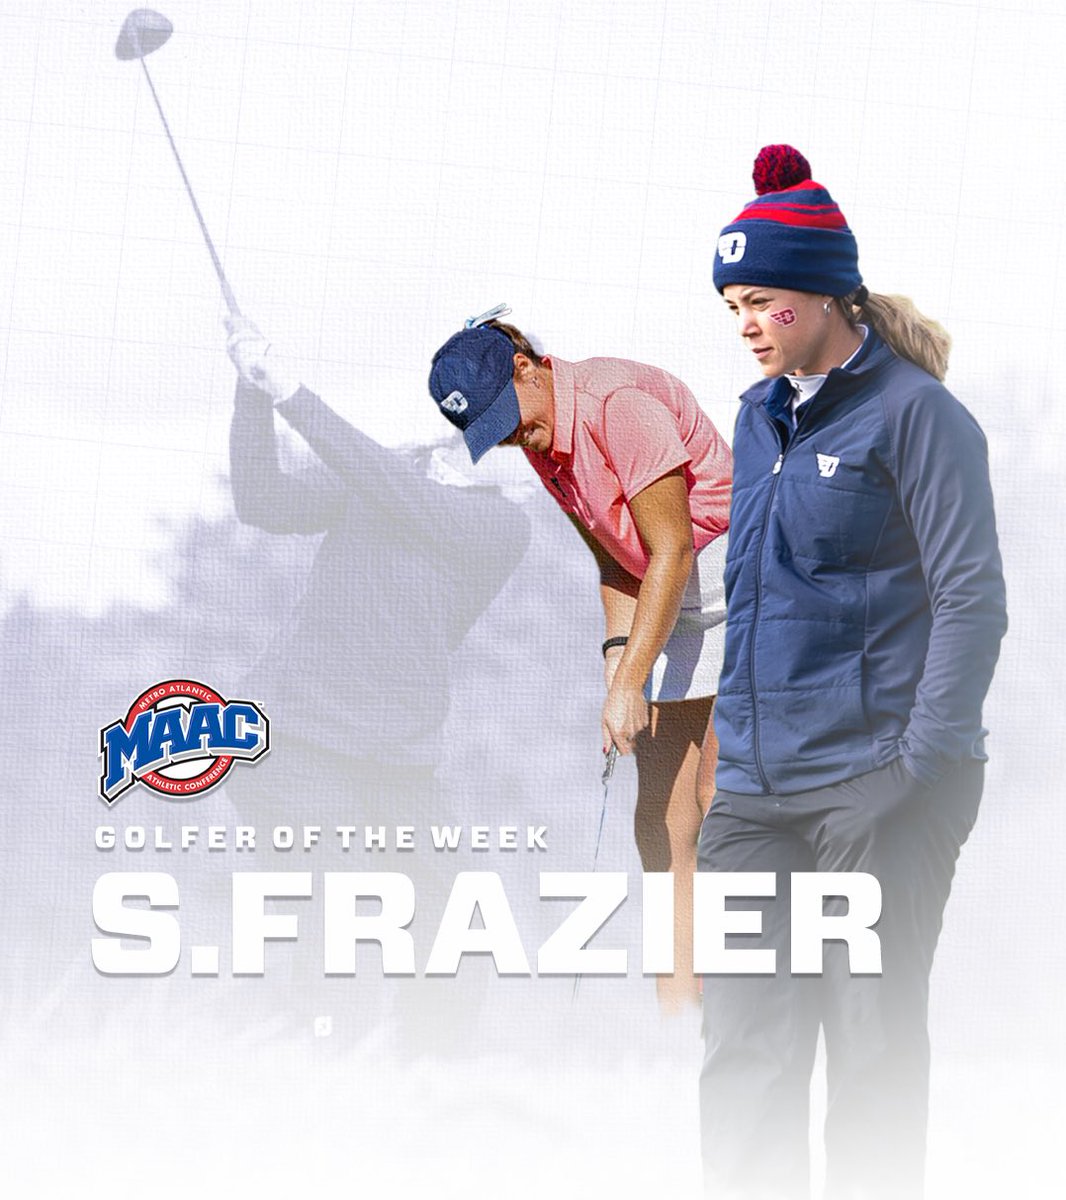 𝐋𝐄𝐀𝐃𝐈𝐍𝐆 𝐓𝐇𝐄 𝐖𝐀𝐘 👏

Sarah Frazier is your @maacsports Women’s Golfer of the Week! 

#MAACGolf // #UDWGOLF